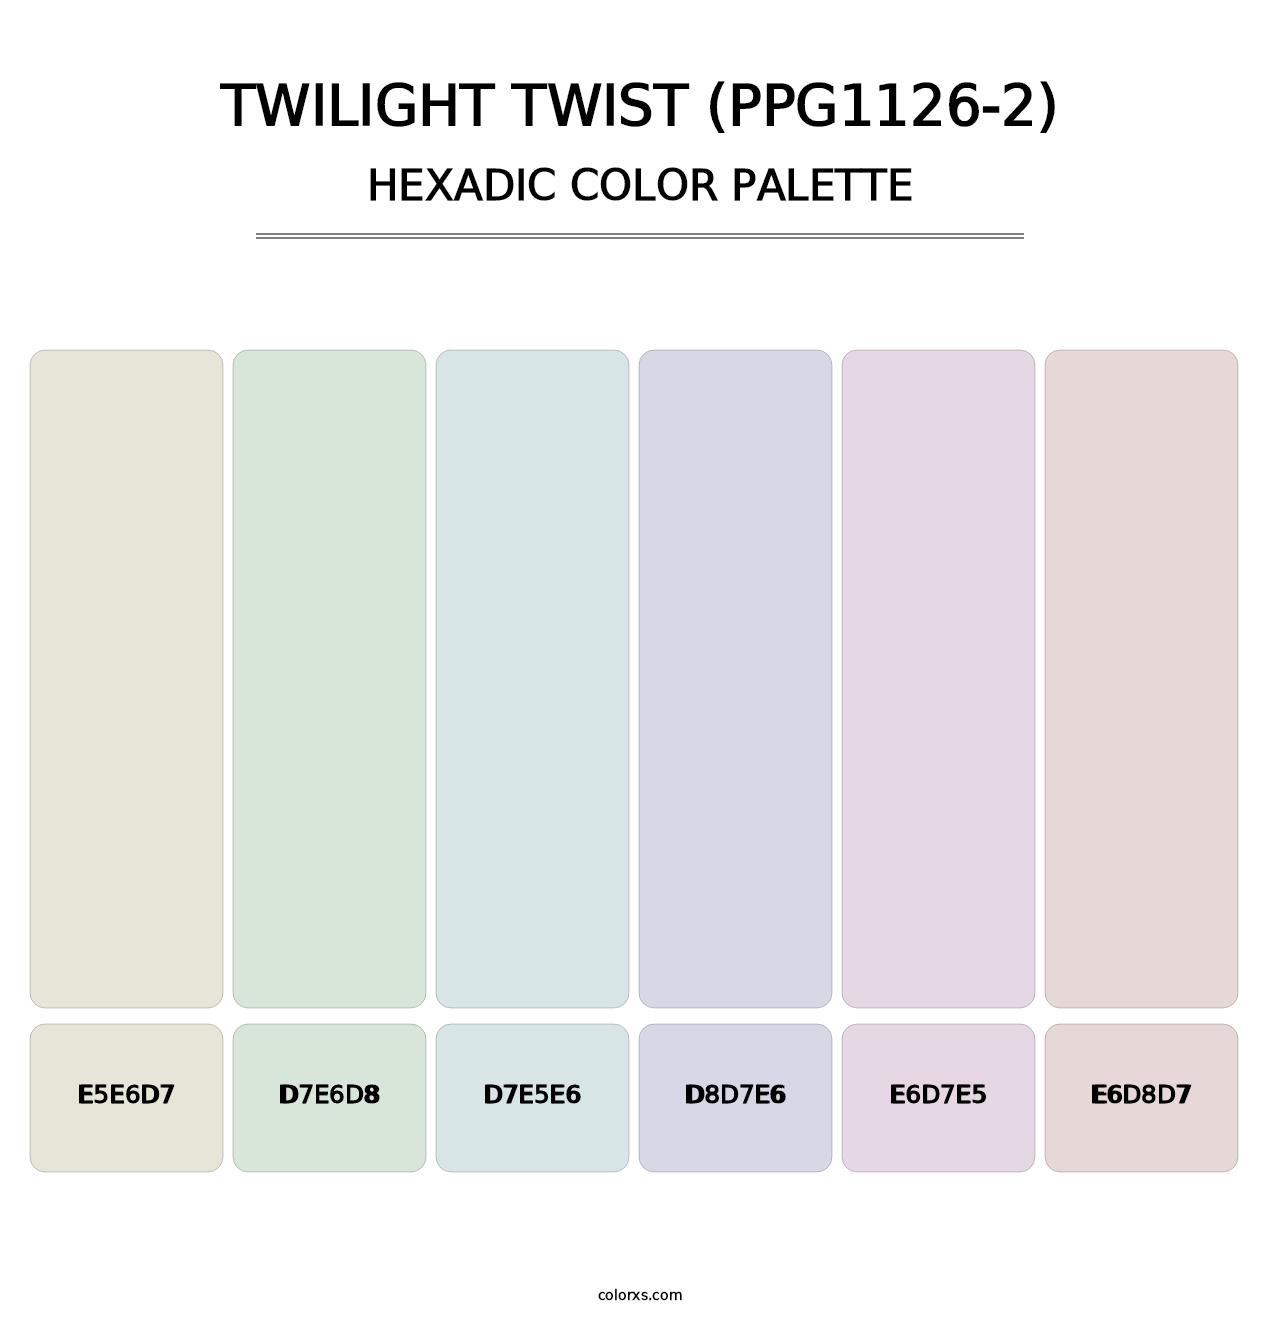 Twilight Twist (PPG1126-2) - Hexadic Color Palette